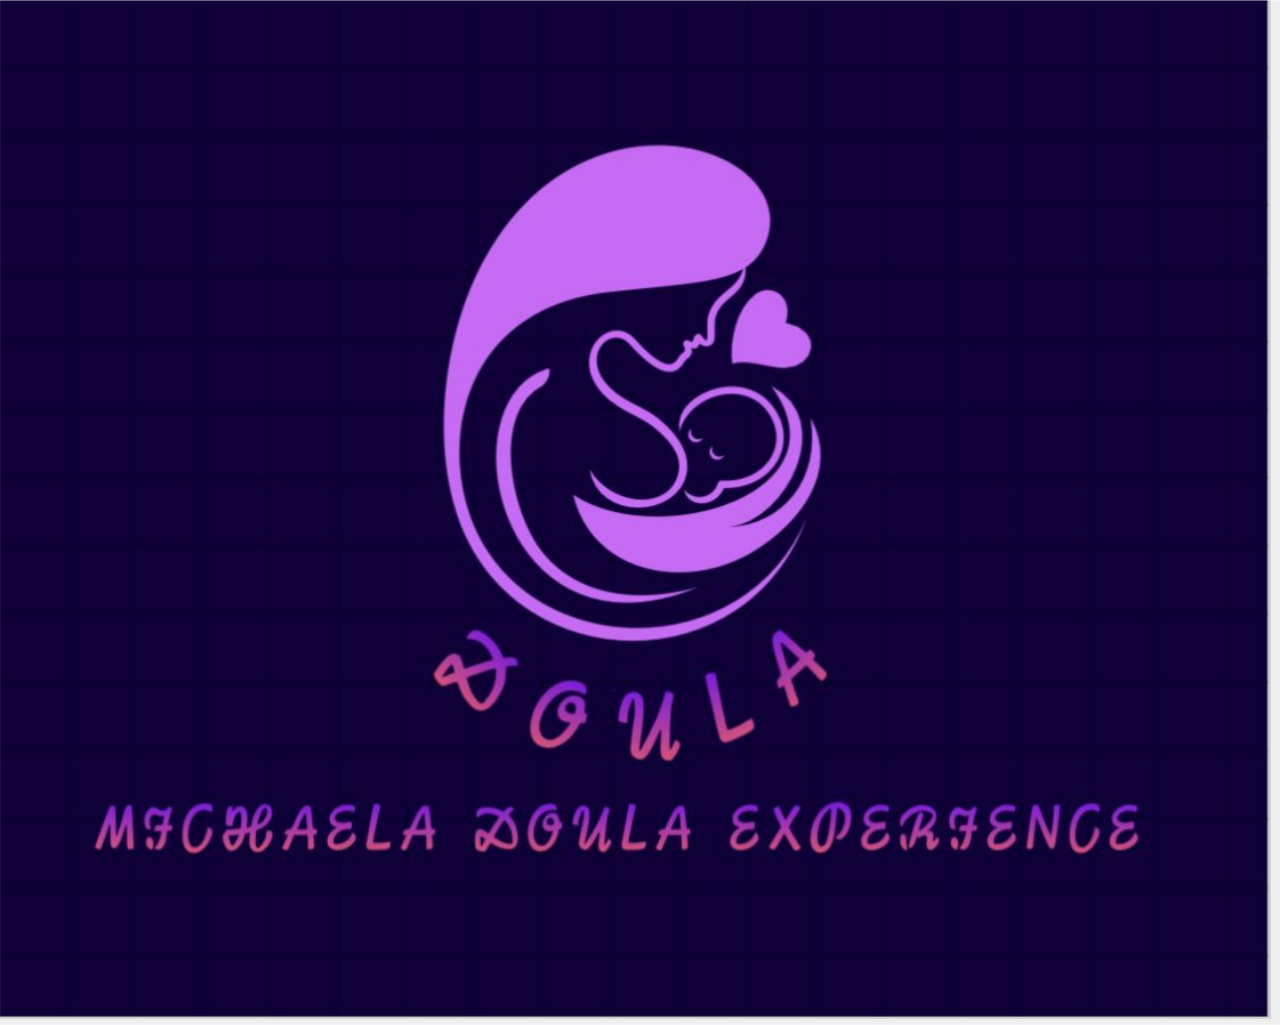 Michaela Doula Experience 's web page